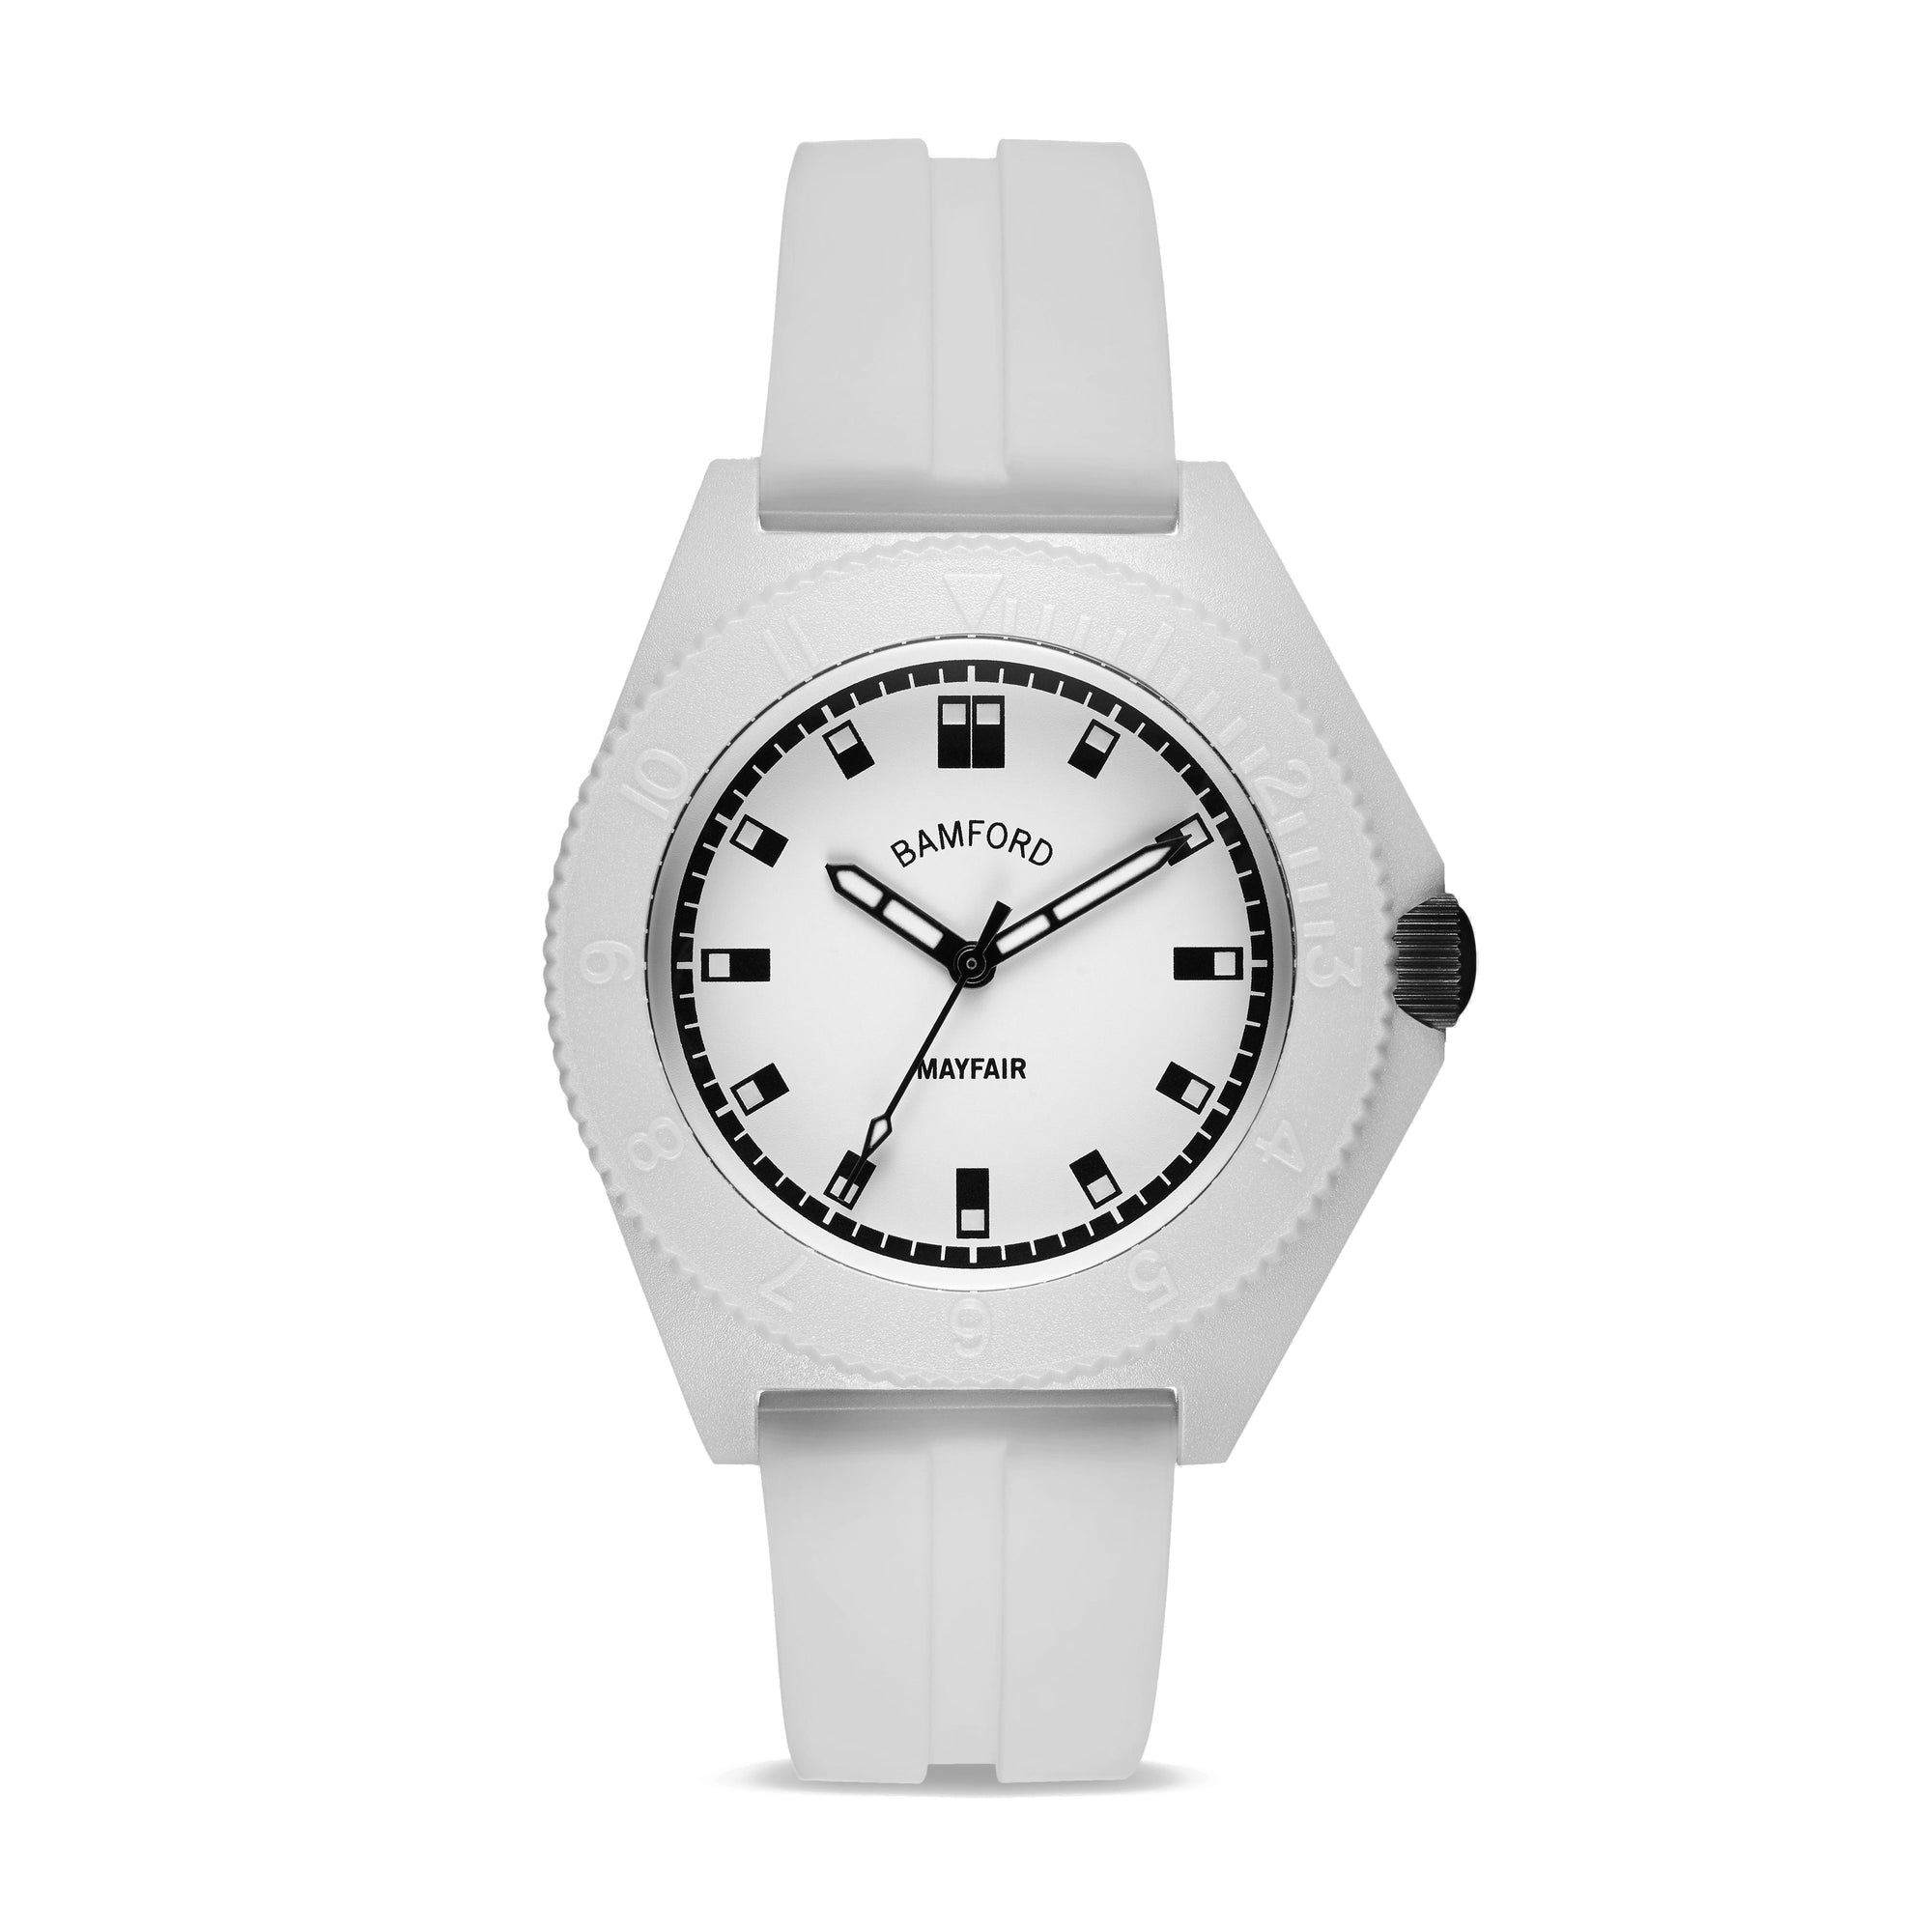 Bamford Watches - Mayfair Sport - (White) view 1